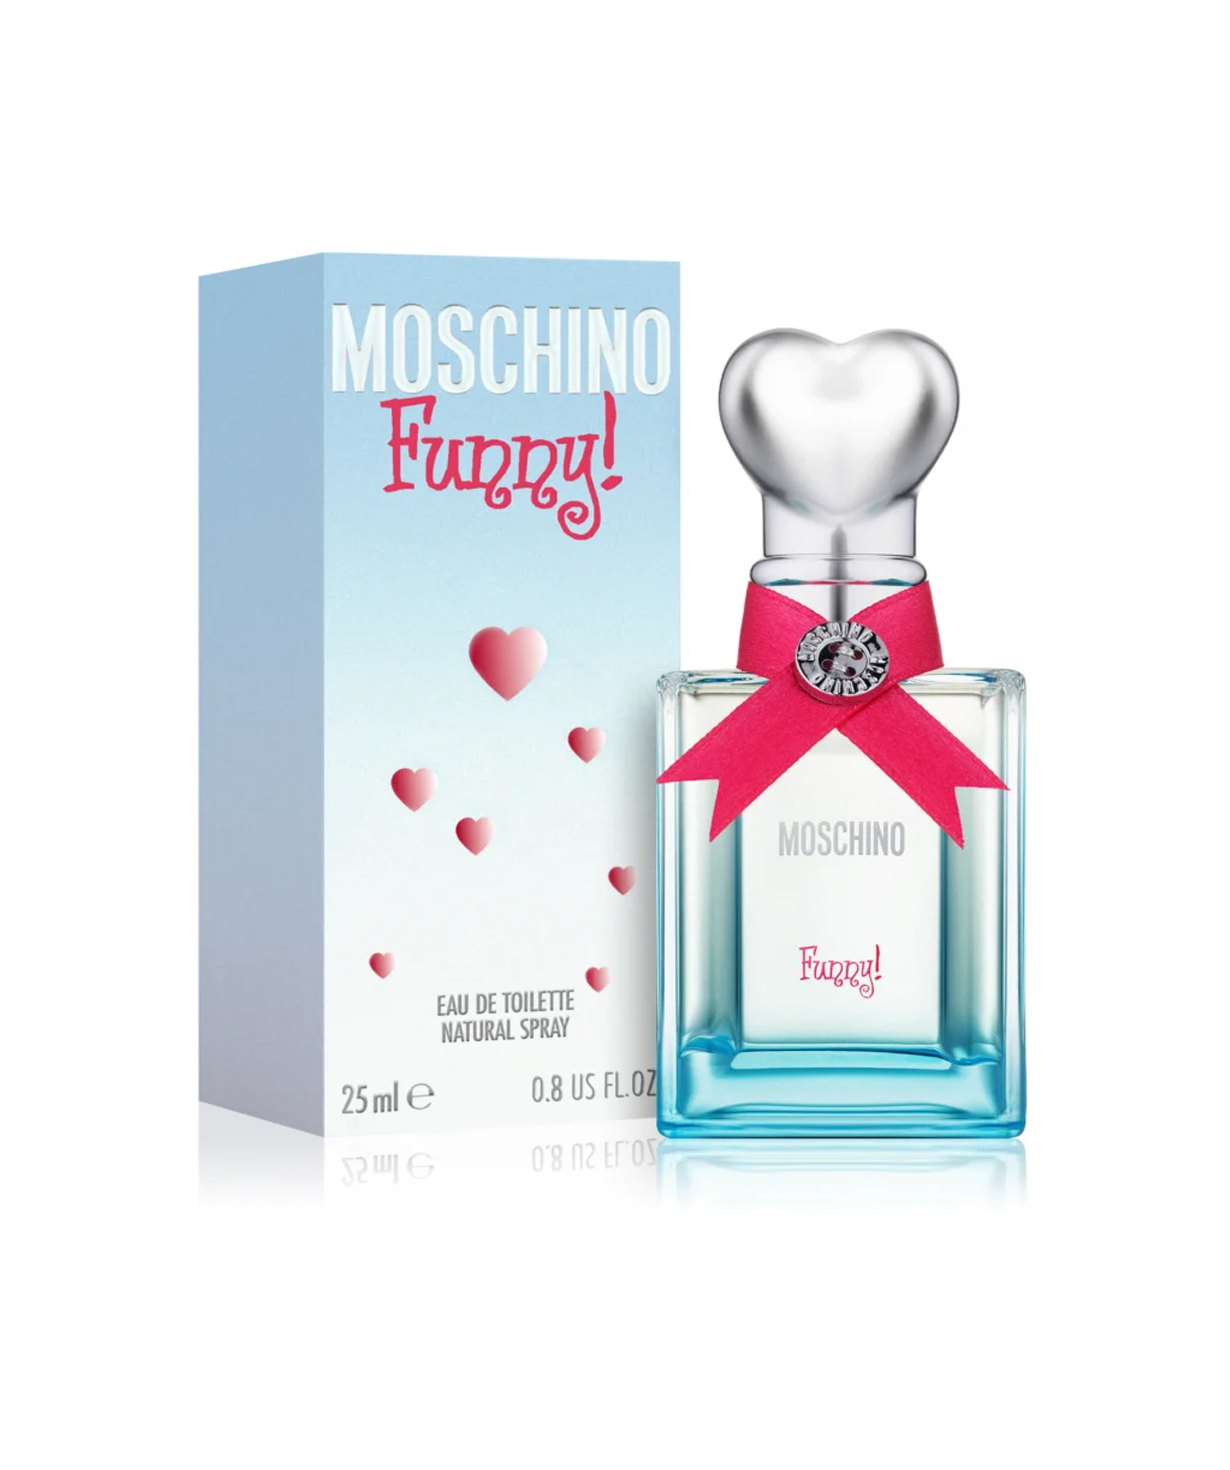 Perfume «Moschino» Funny!, for women, 25 ml